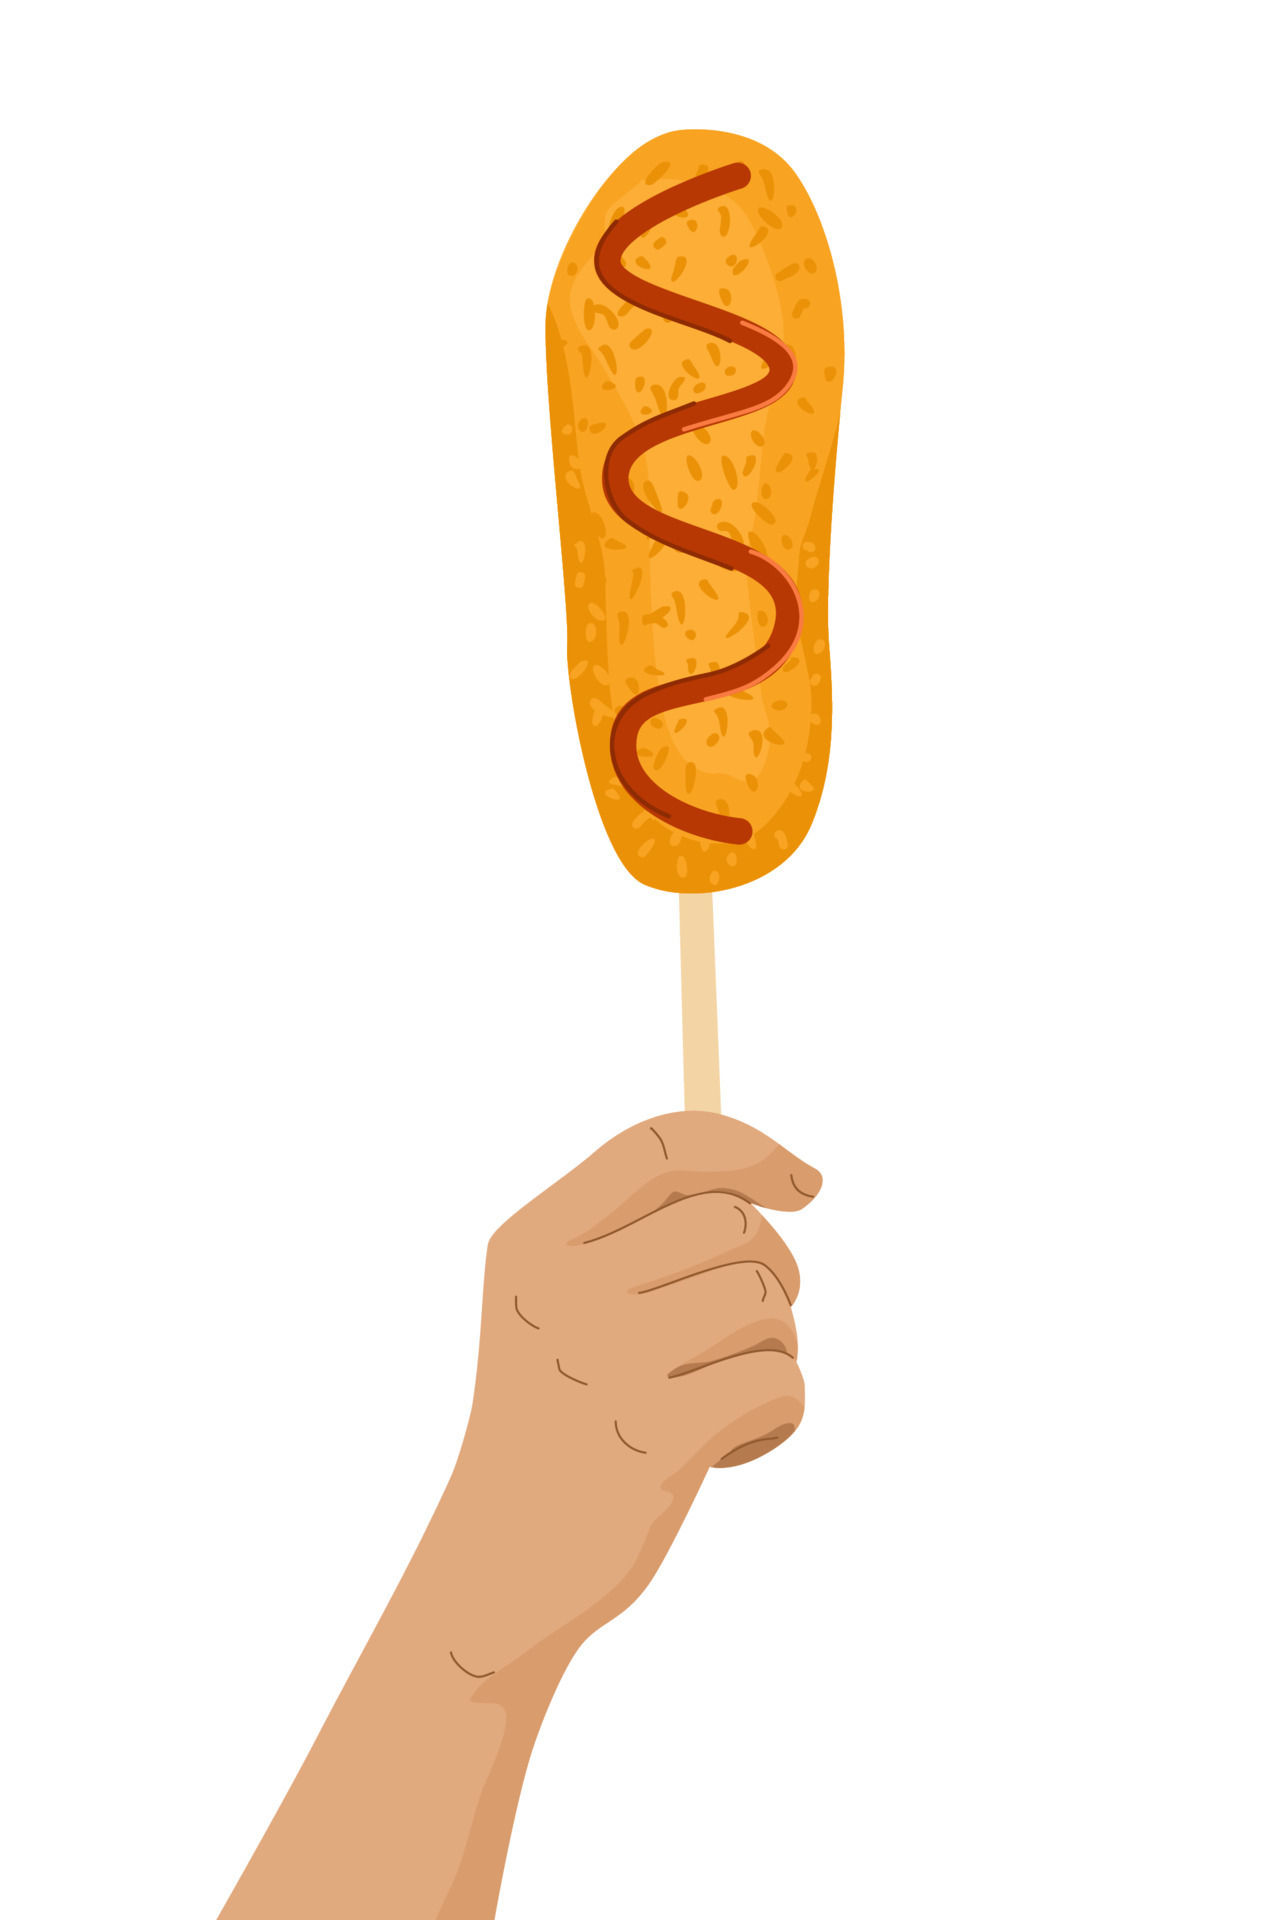 Korean Corn Dog (Gamja Hotdog) 